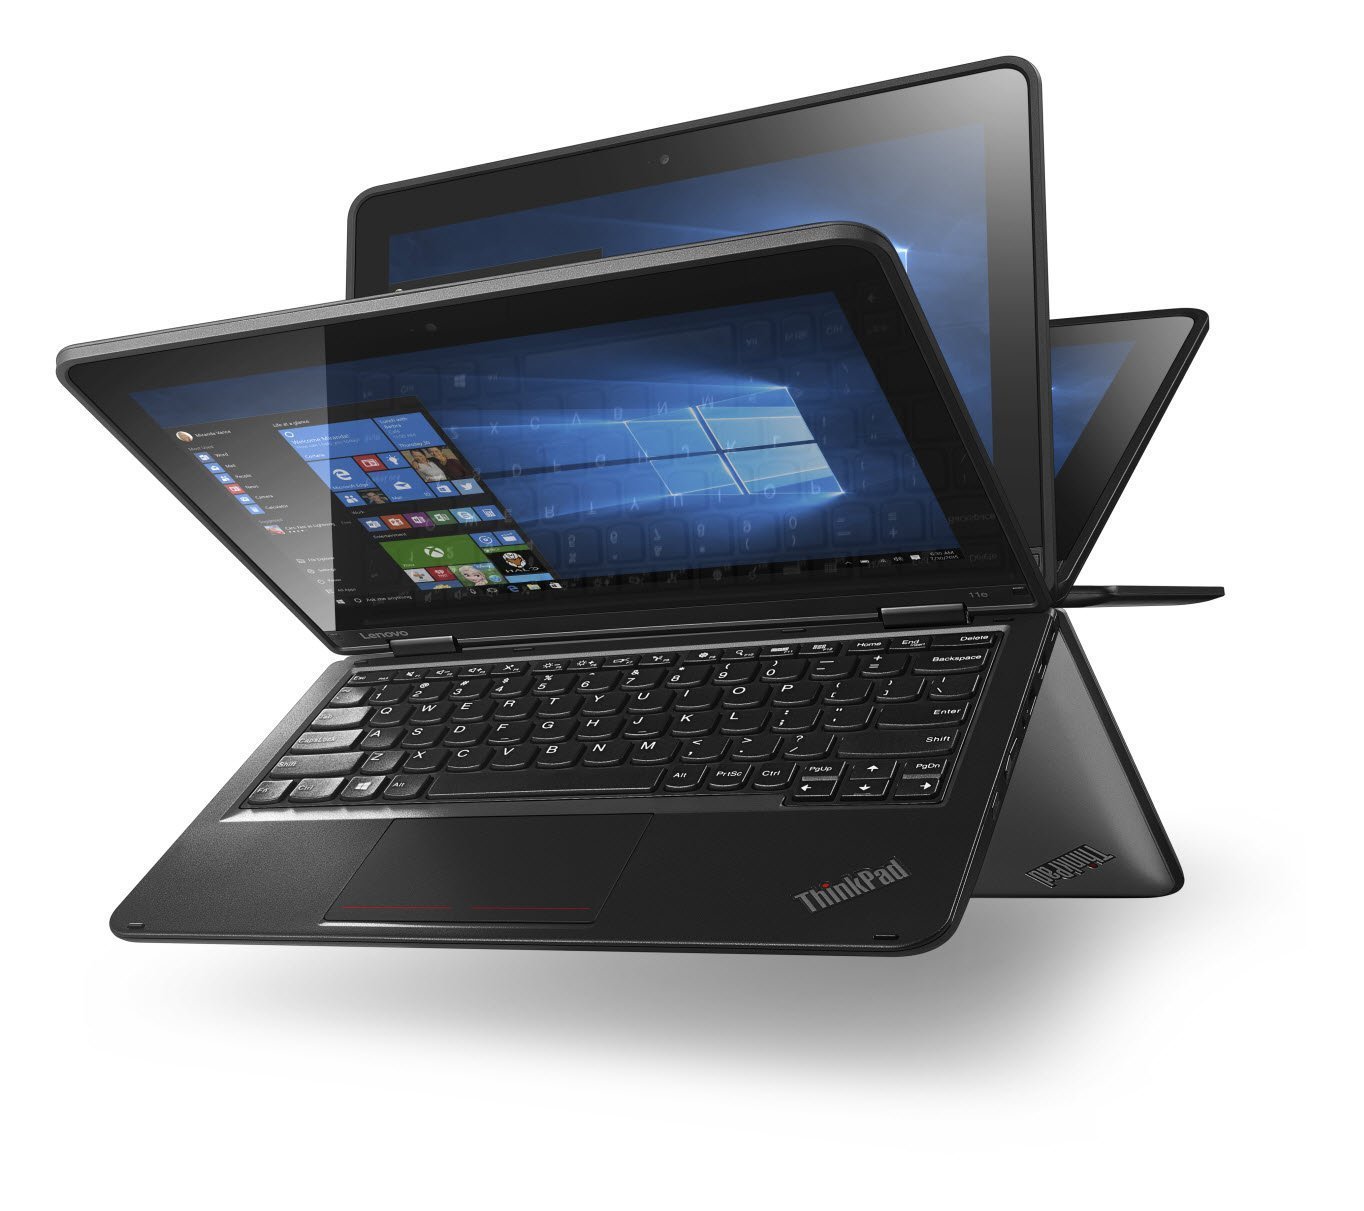 Save on Lenovo Thinkpad Yoga Convertible Laptop – Just $279.99!